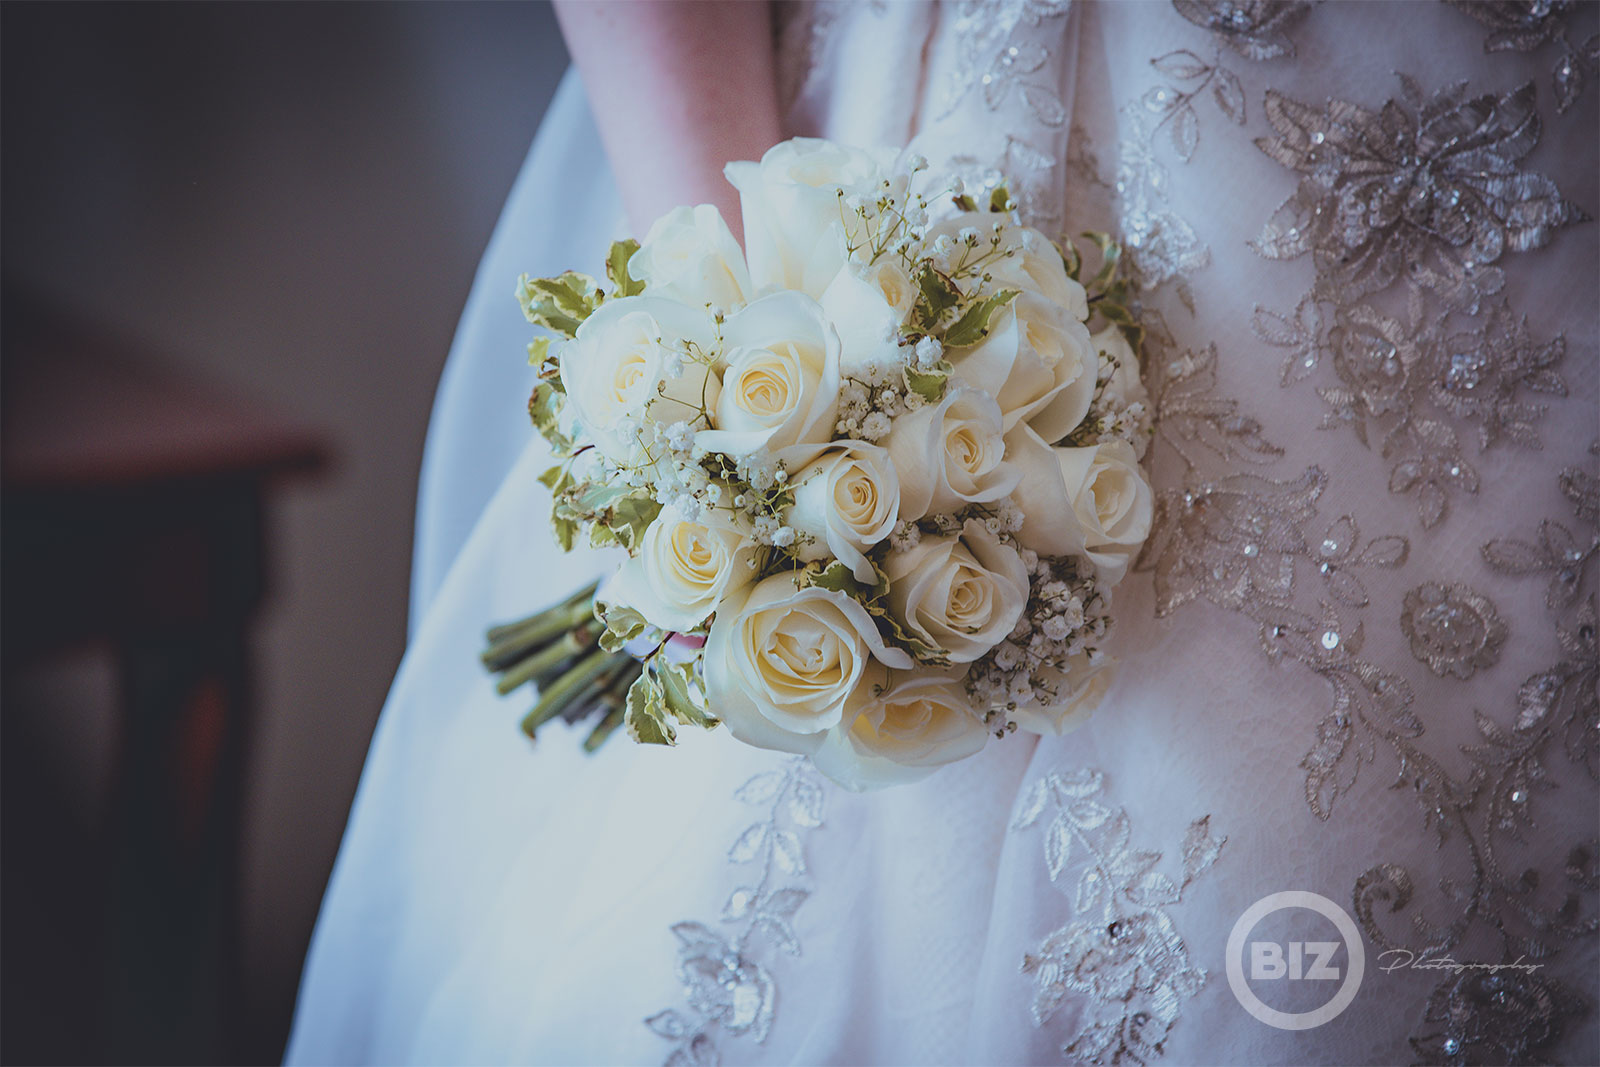 Weddings, Wedding Photography, Bride, Flowers, Biz photography llc, cleveland, Ohio